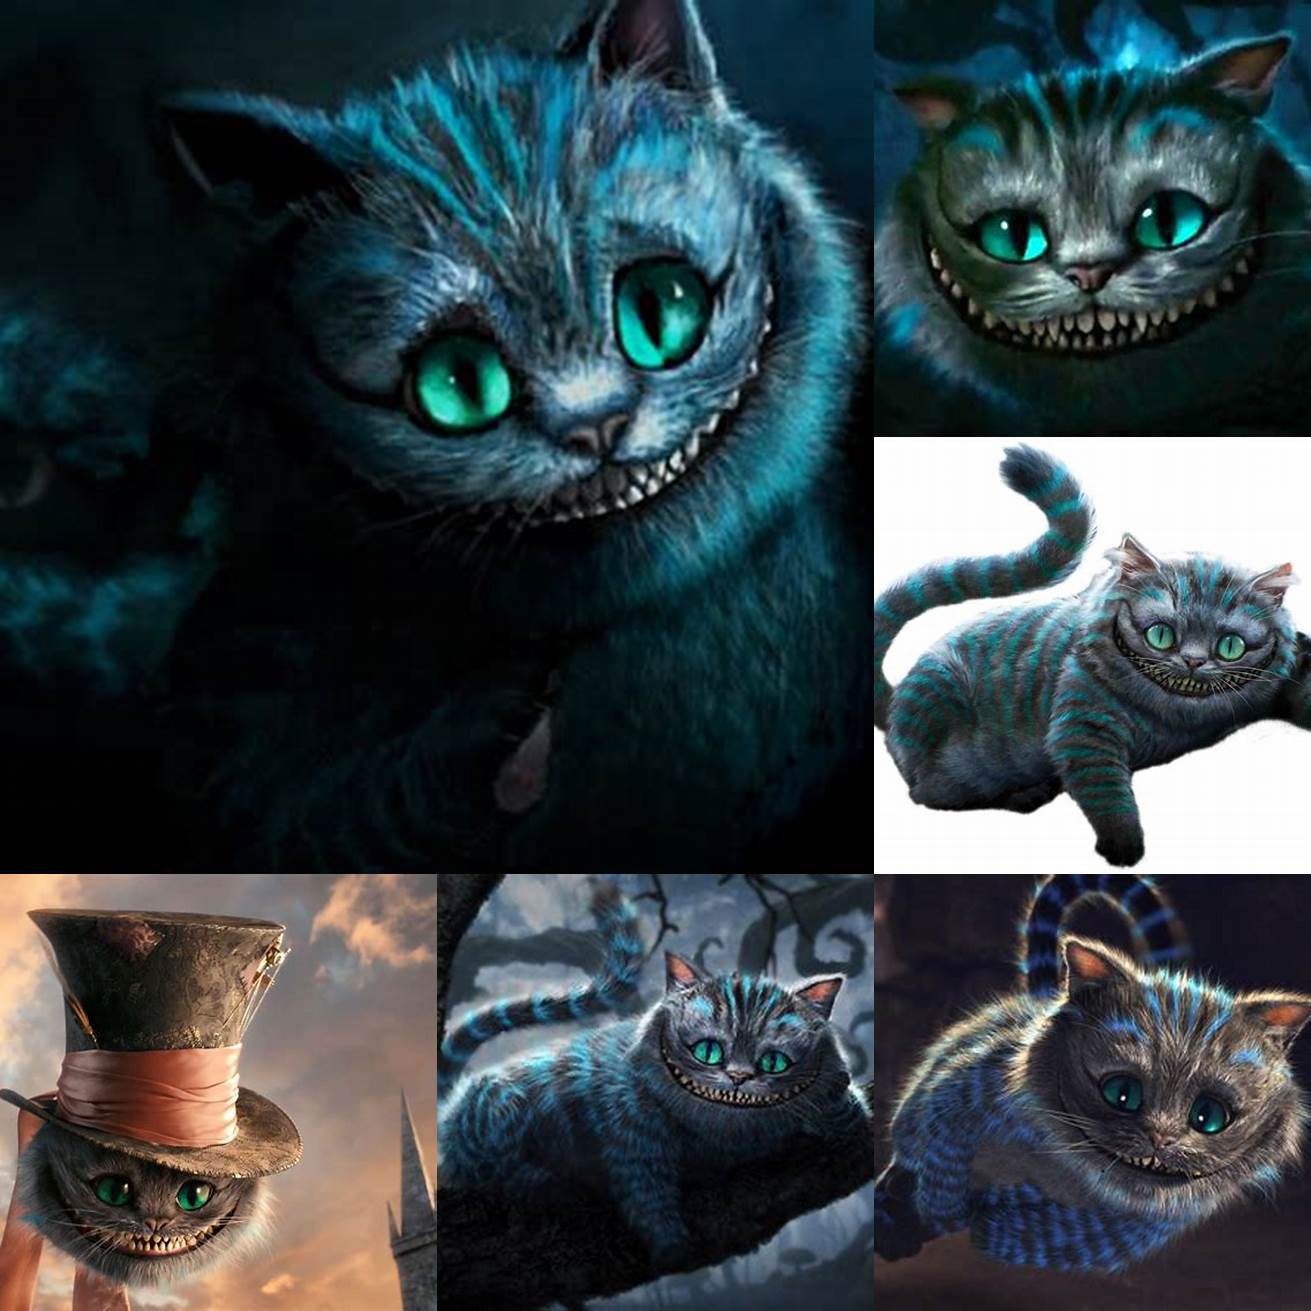 The Cheshire Cat in Tim Burtons Alice in Wonderland